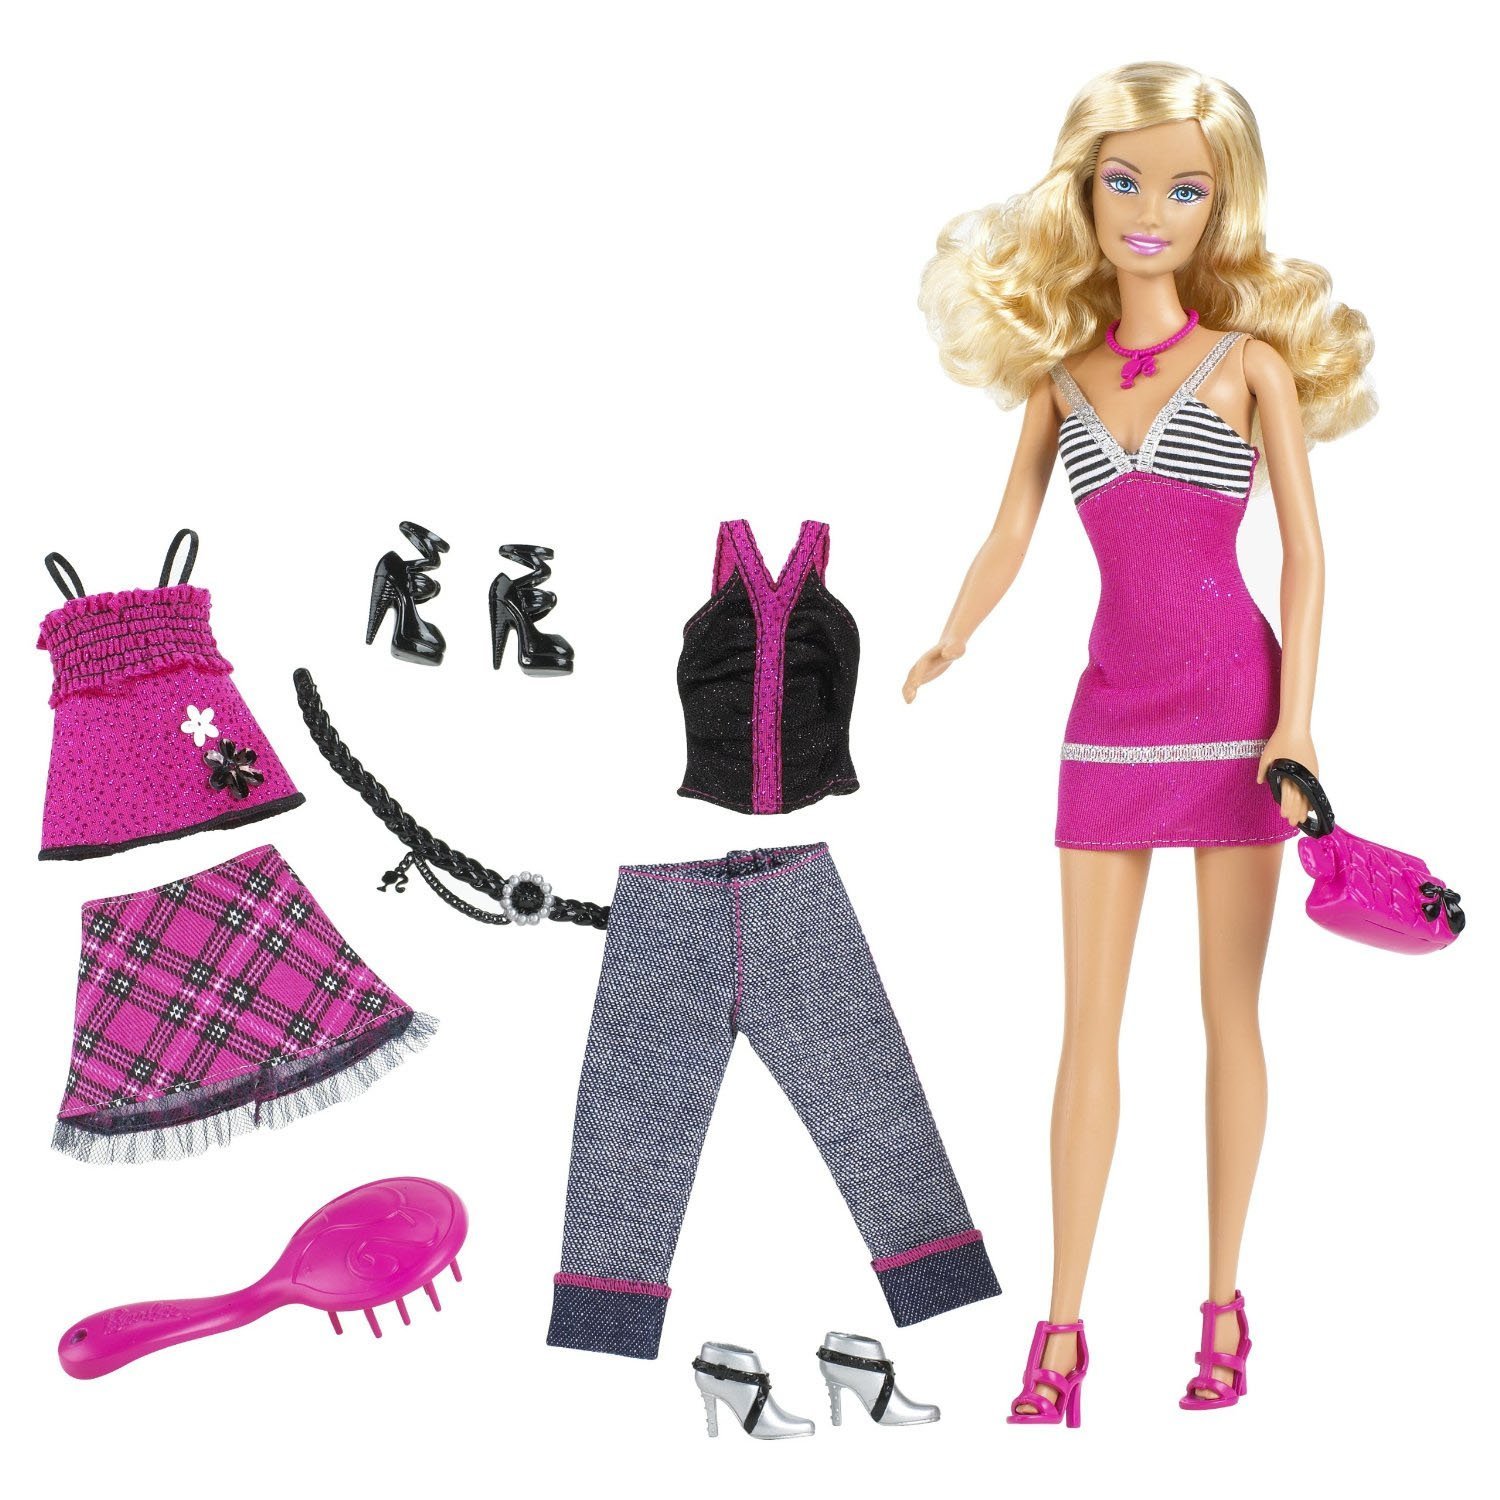 12 inch barbie dolls